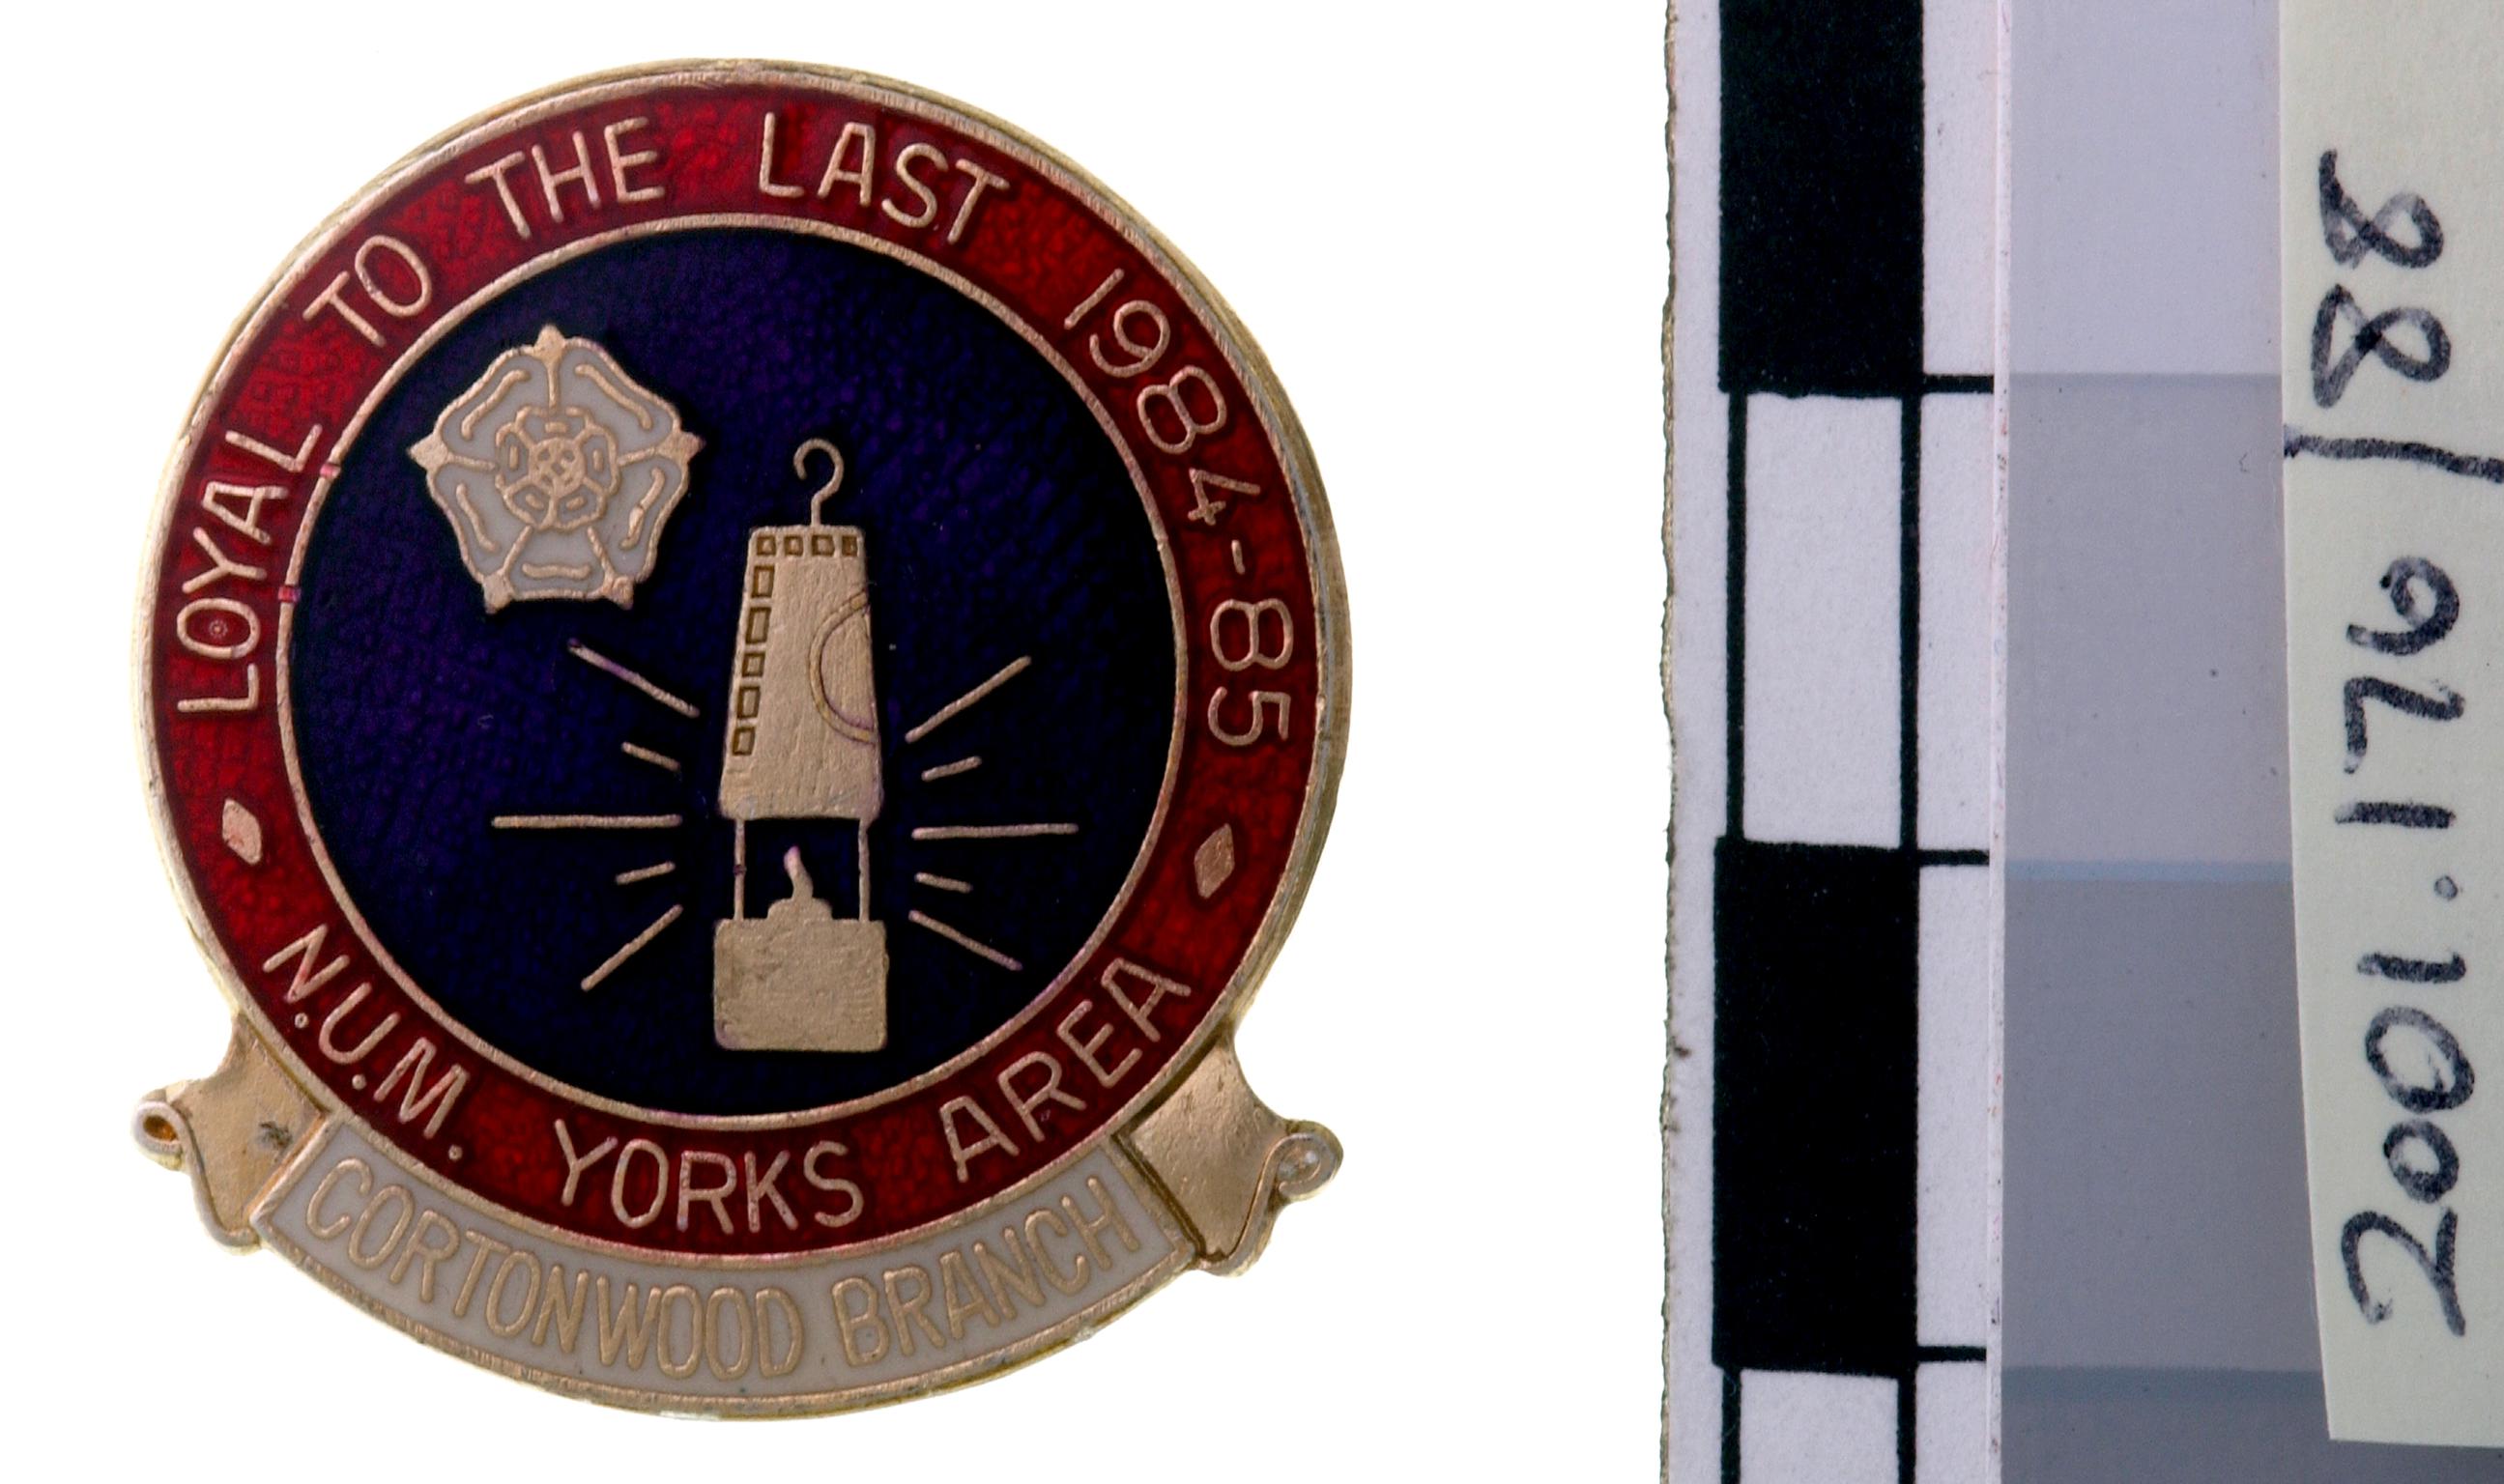 N.U.M. Yorks Area, badge